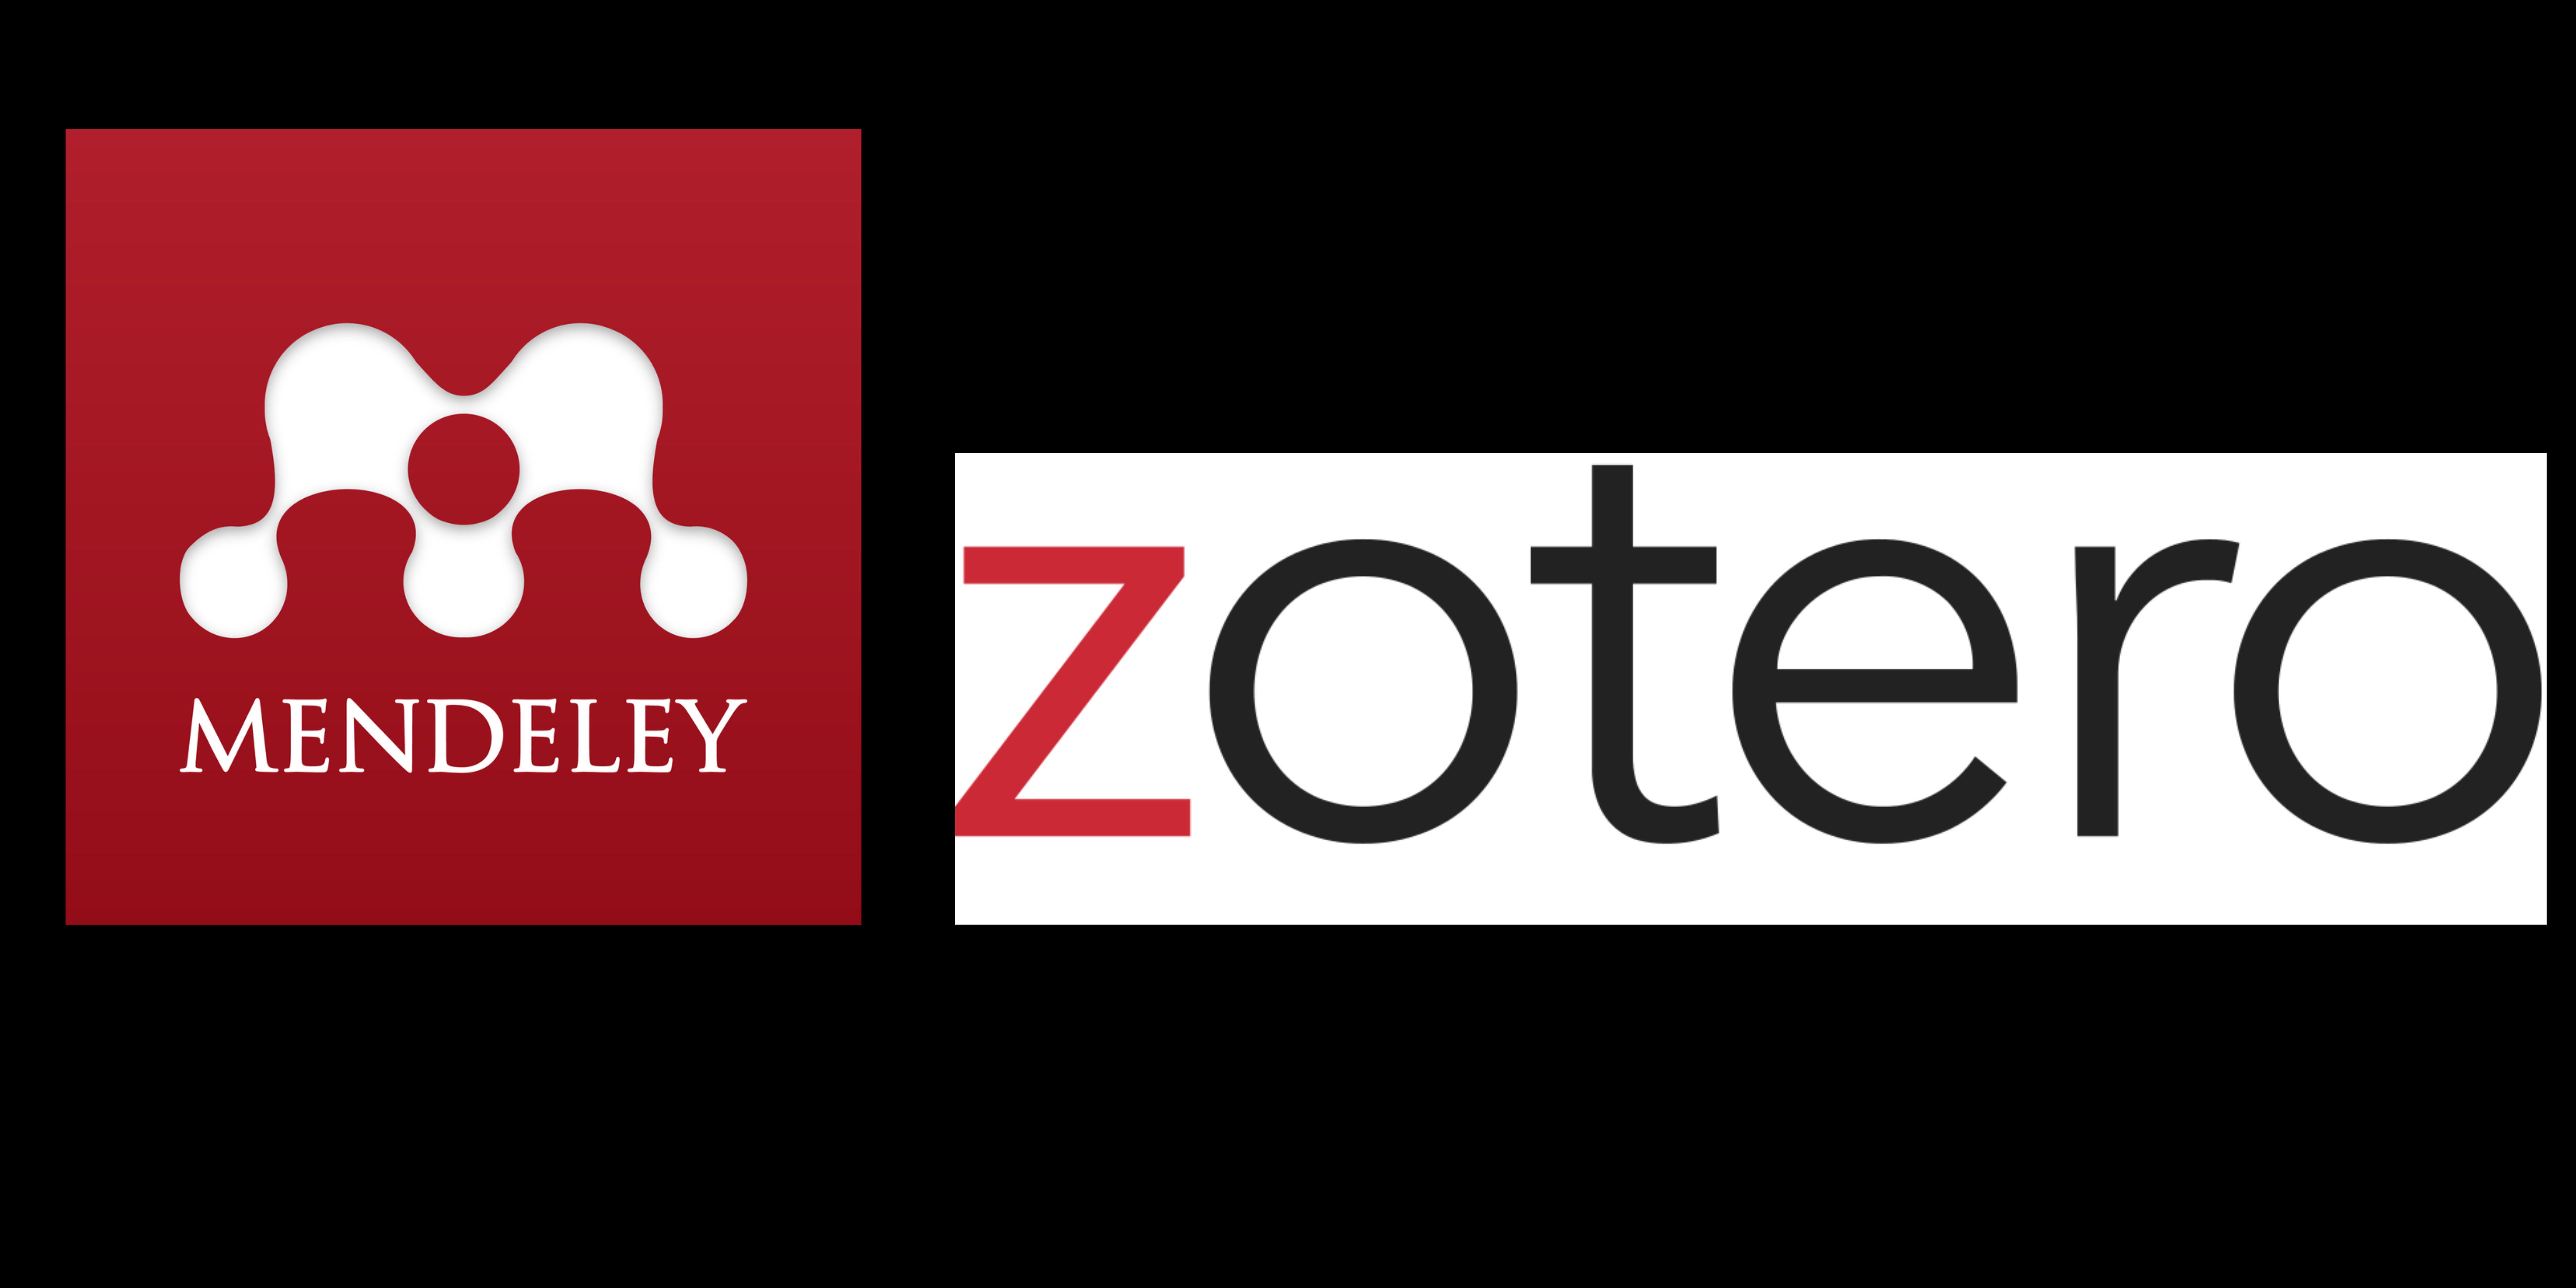 Mendeley logo Zotero logo